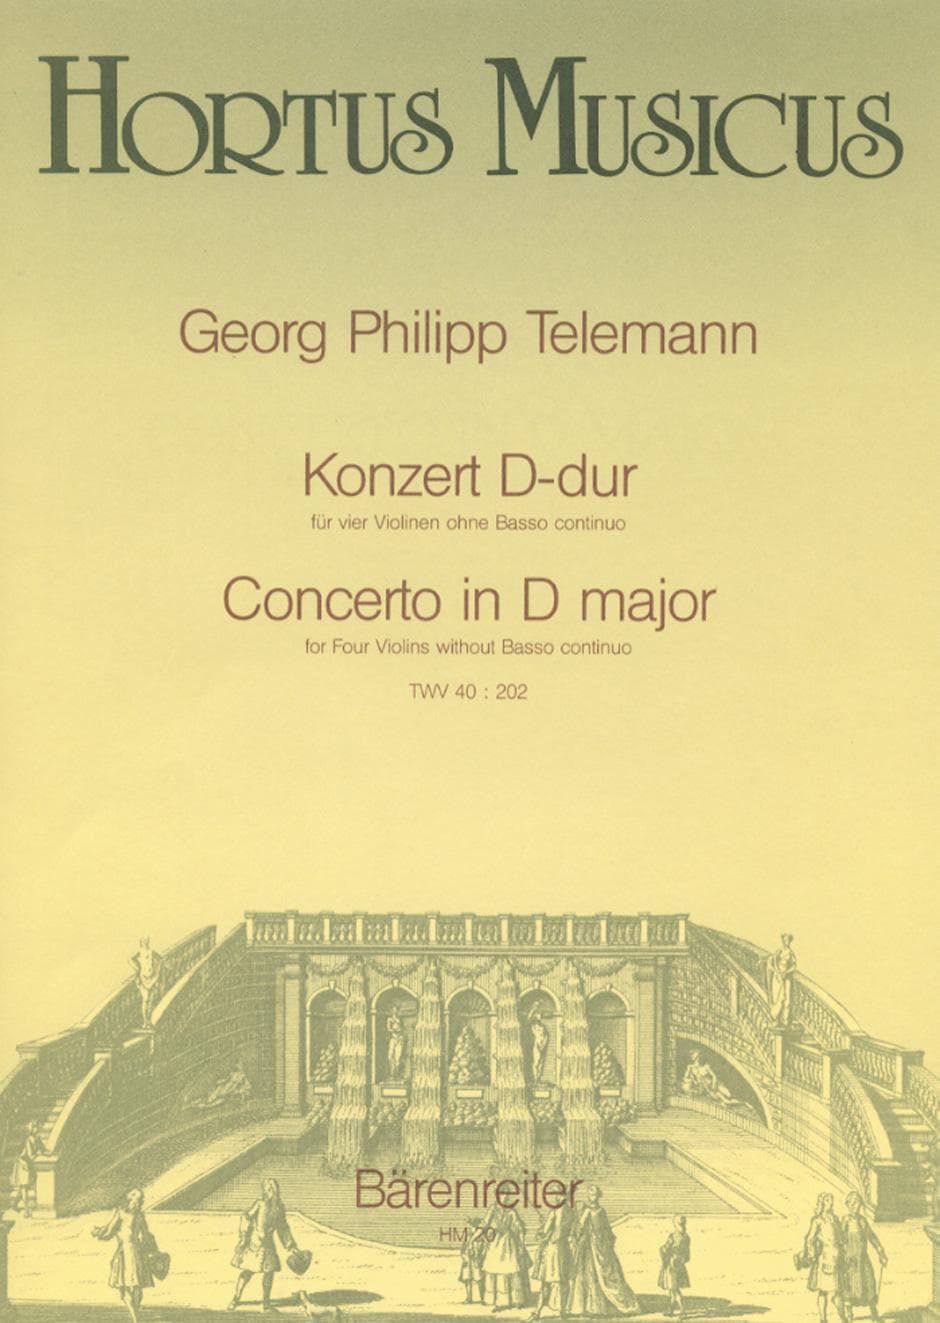 Telemann, Georg Philipp - Concerto in D Major, TWV 40:202 - for Four Violins - Barenreiter URTEXT